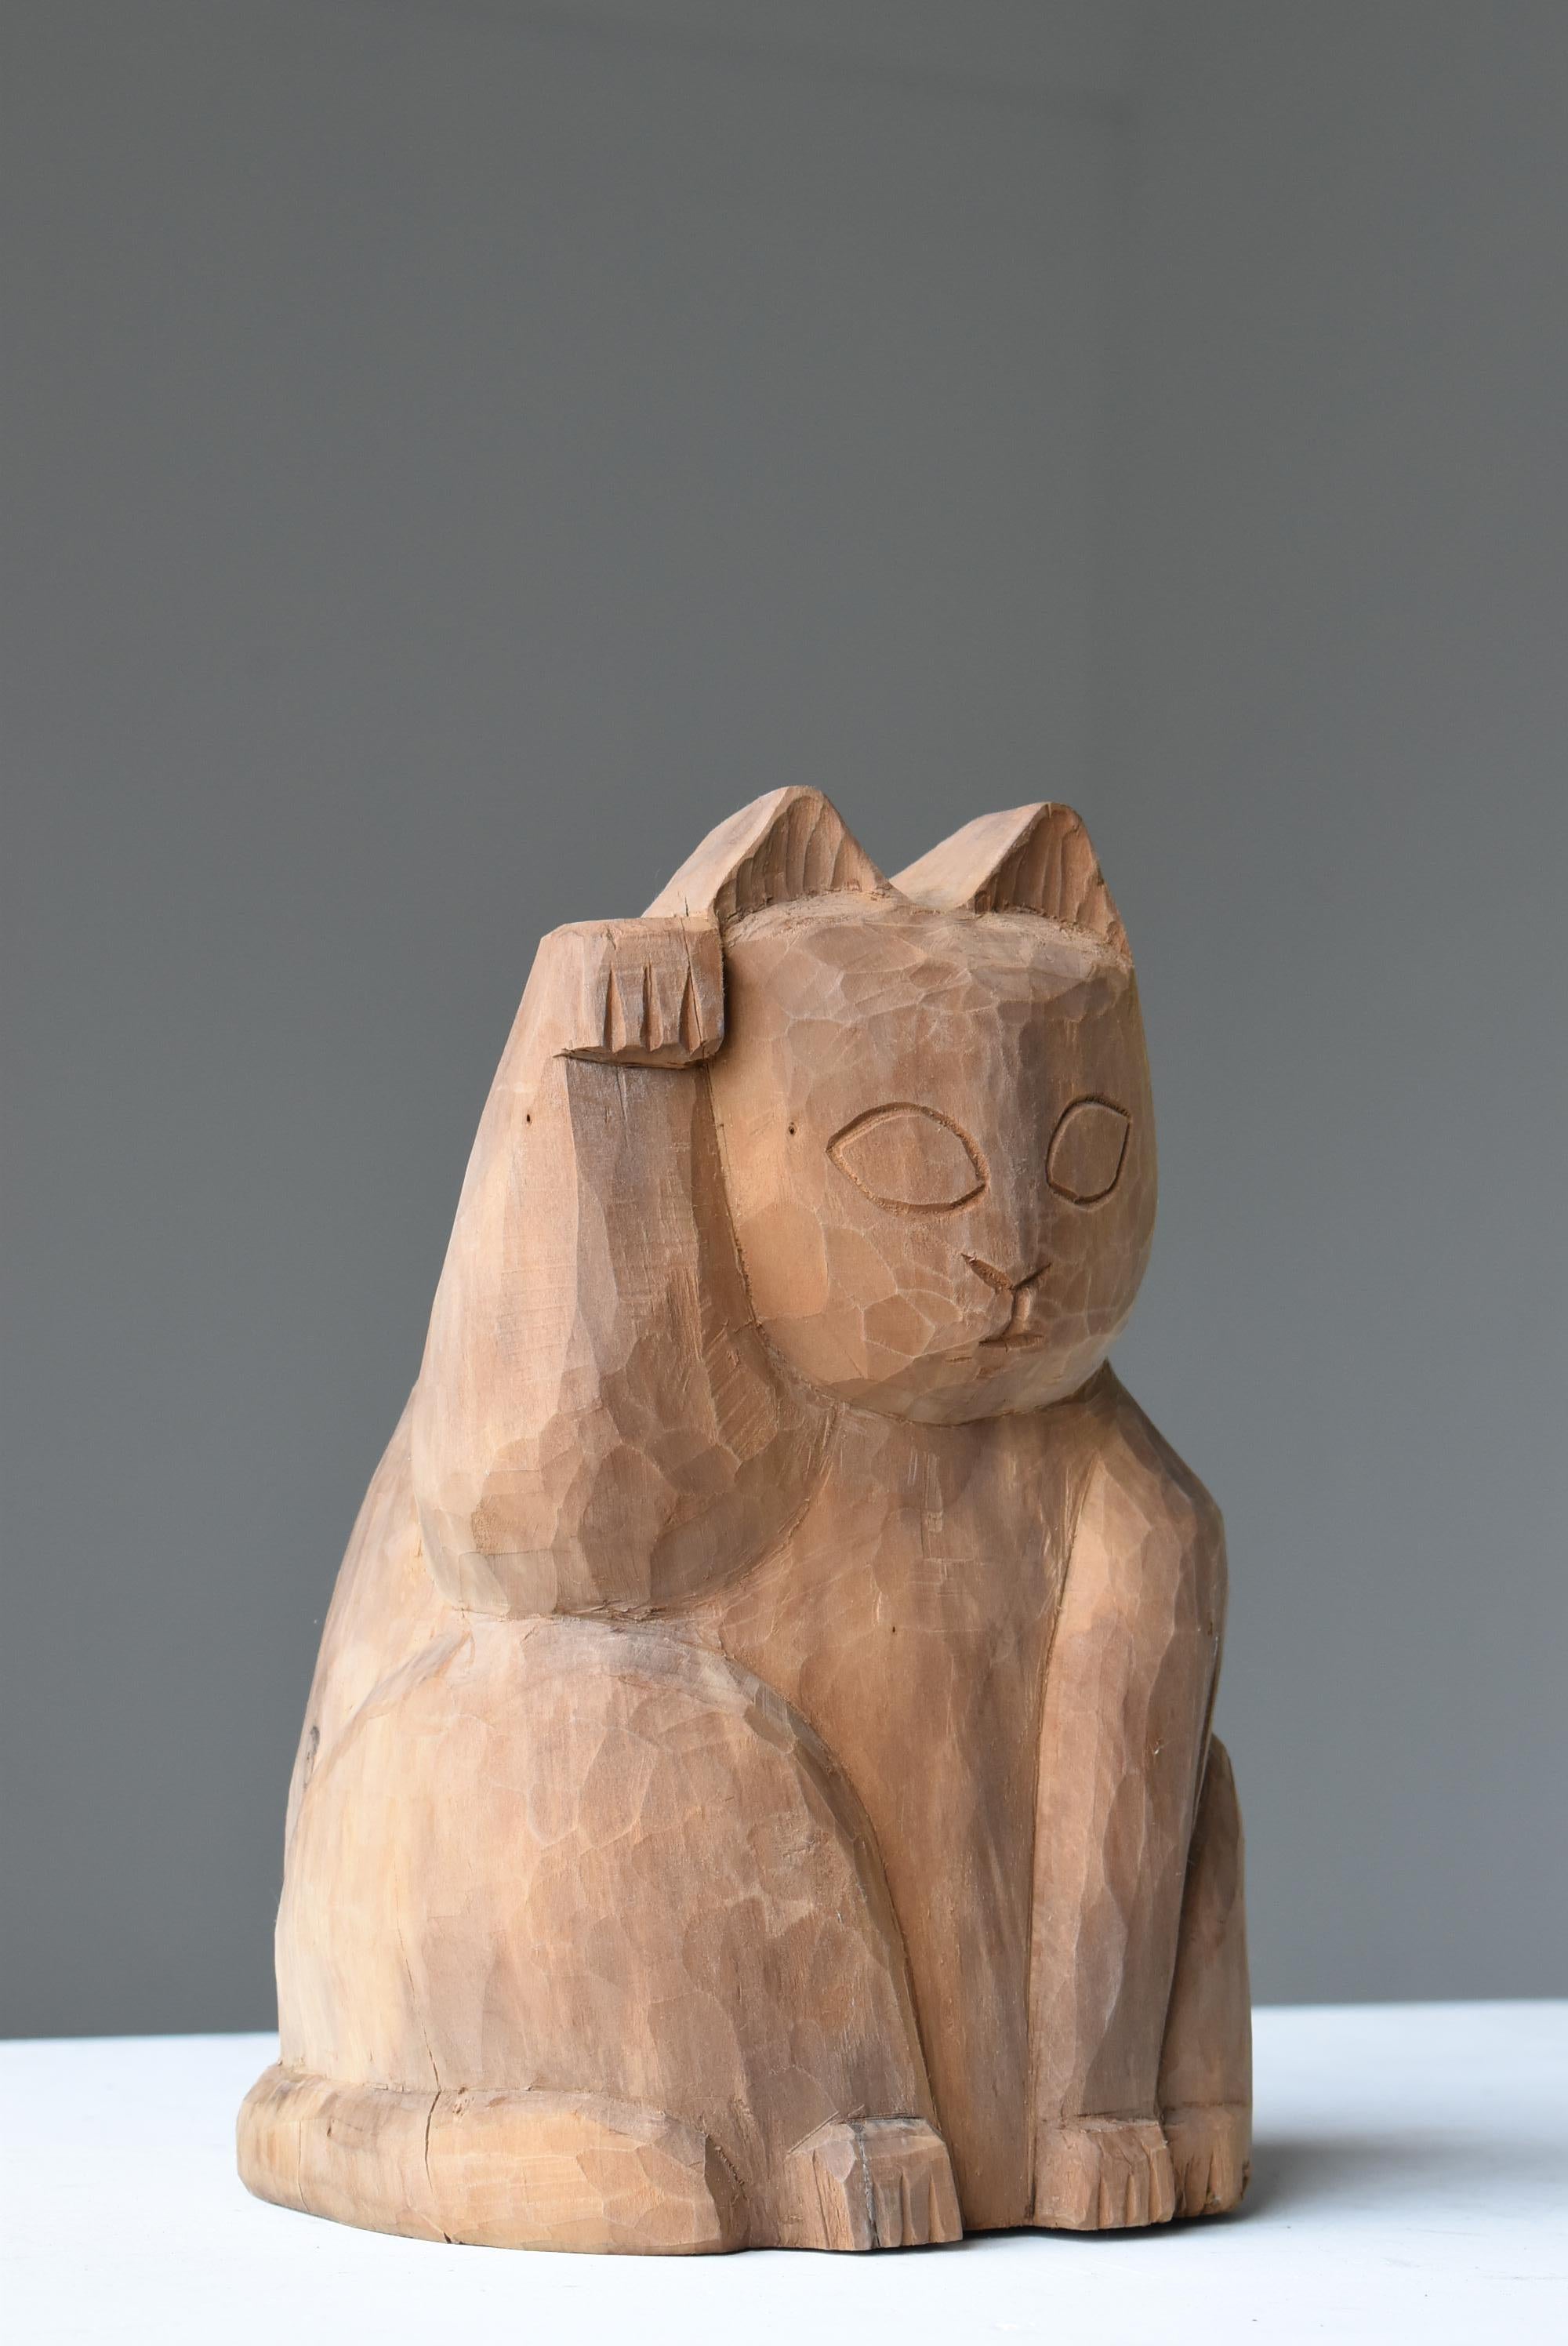 Mid-20th Century Japanese Old Wood Carving Maneki Neko 1950s-1970s/Beckoning Cat Sculpture Mingei